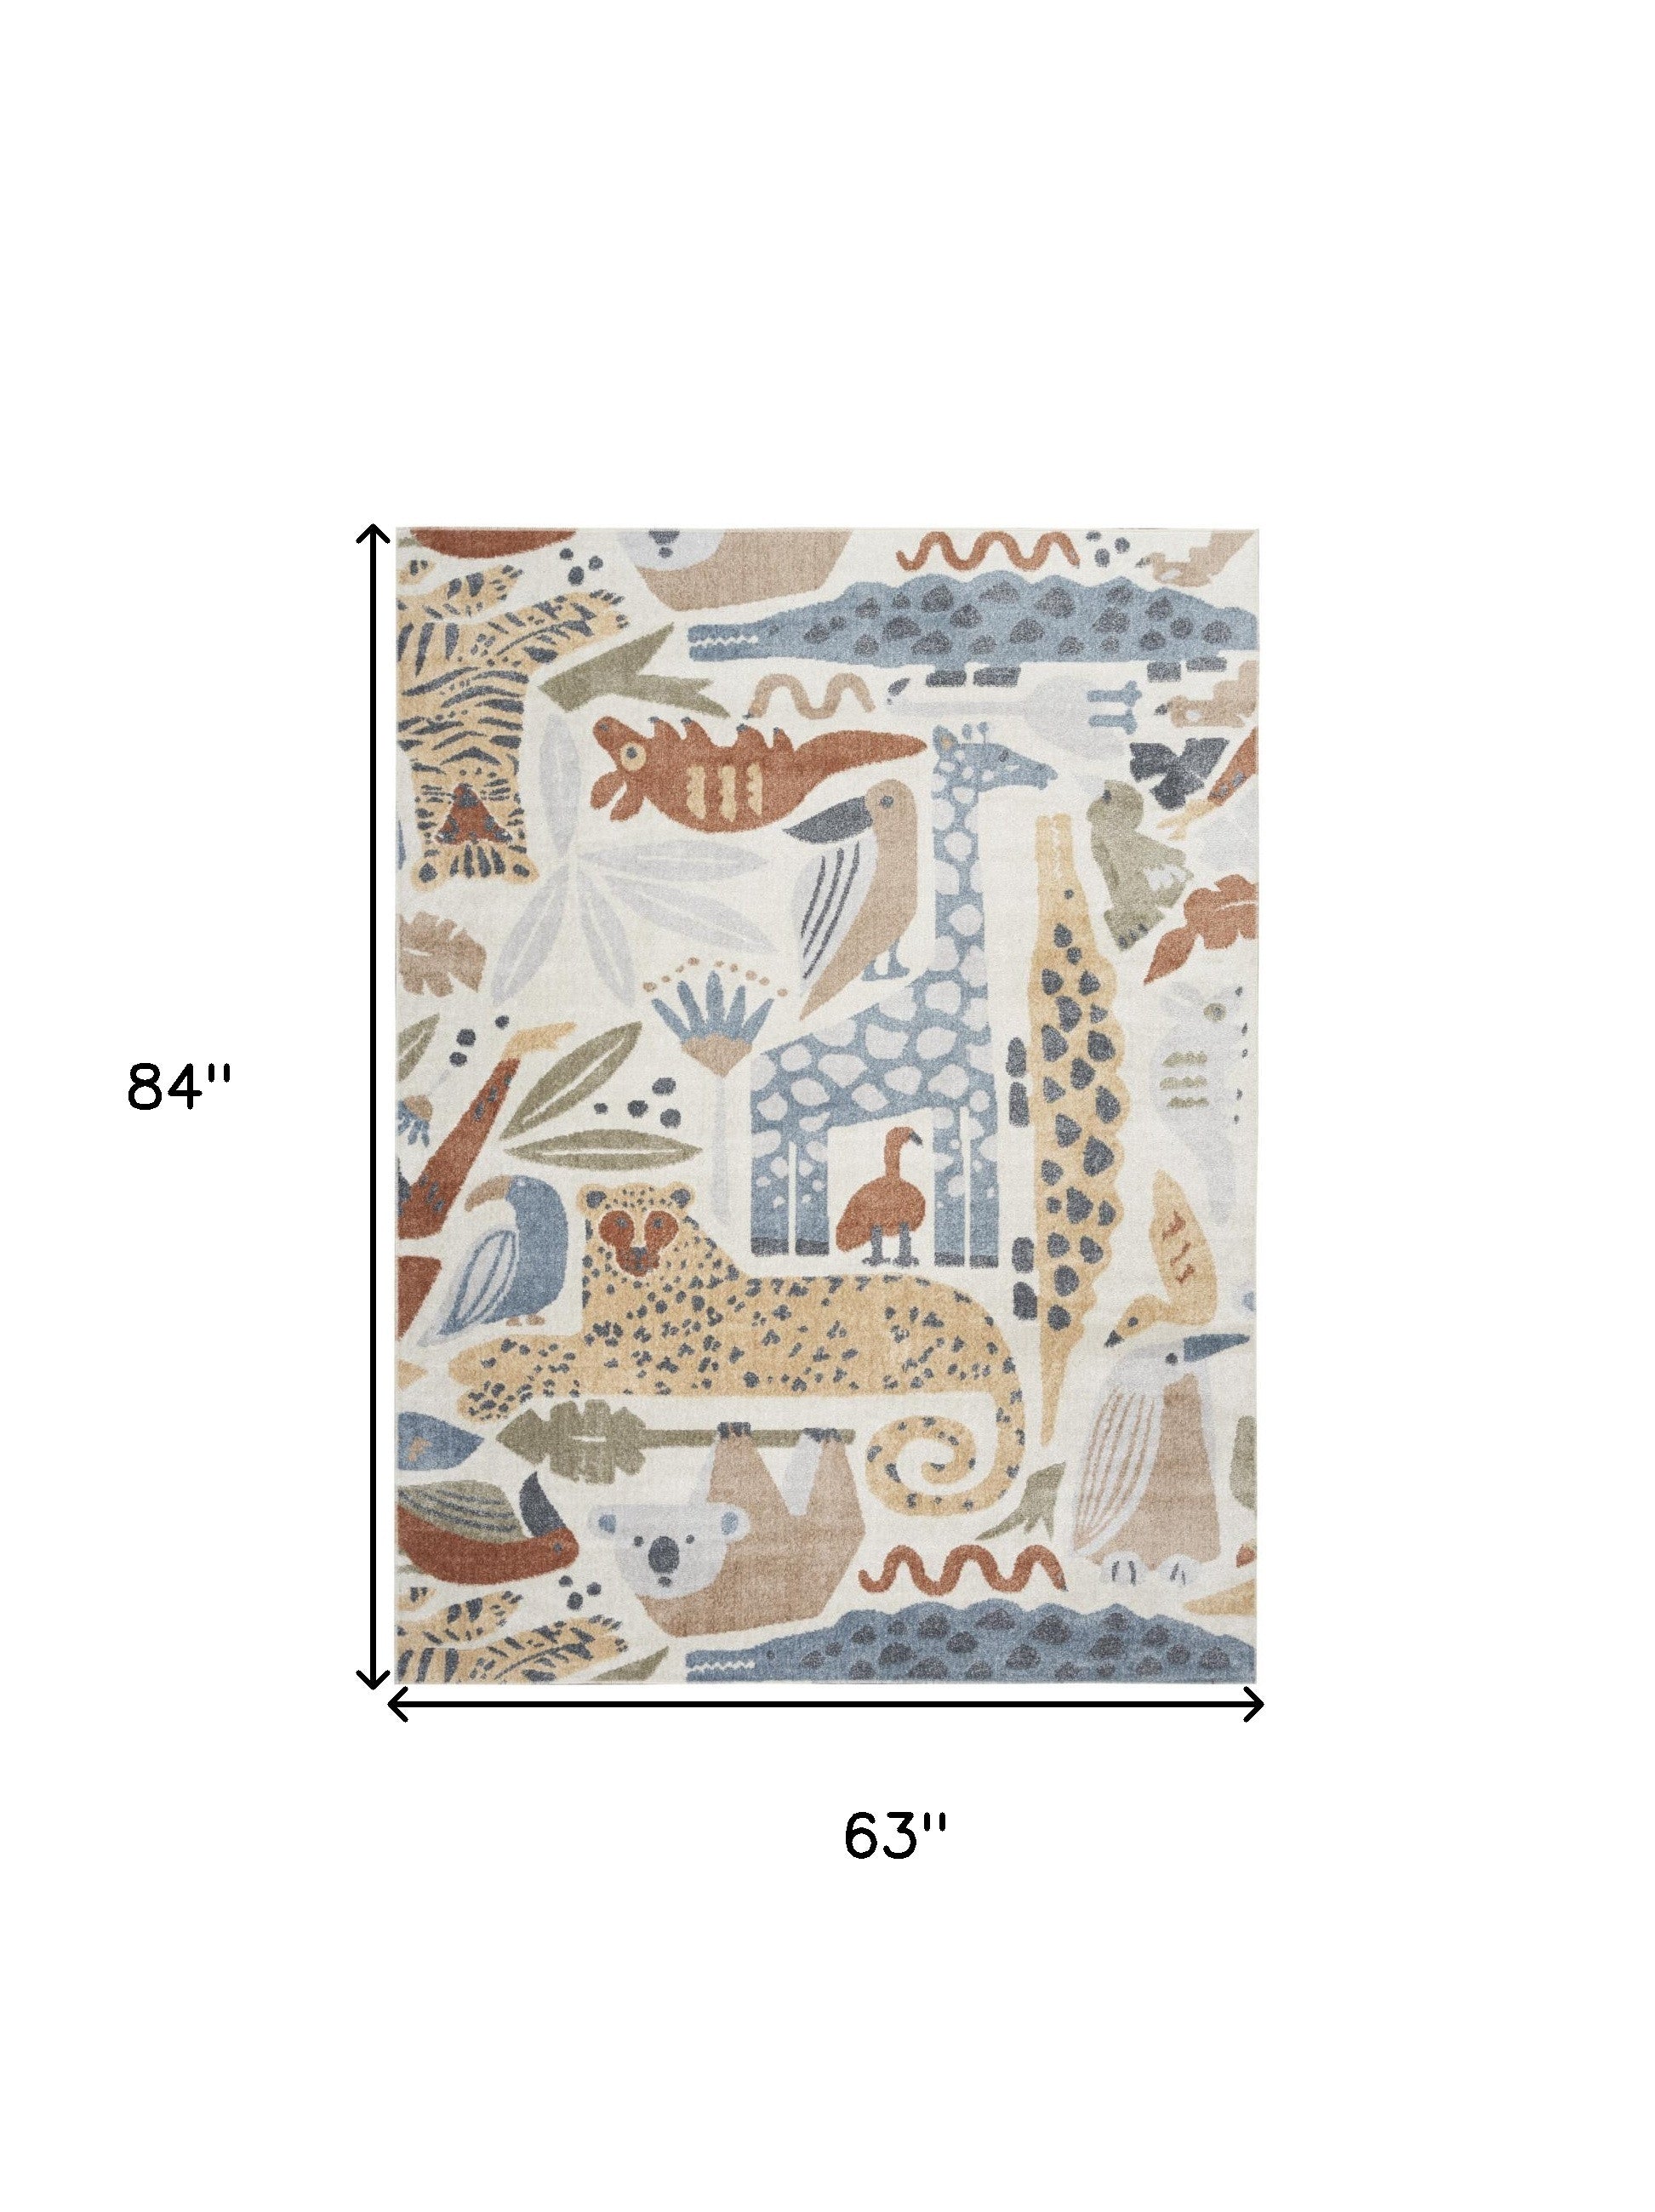 5' x 7' Ivory Blue and Gray Animal Print Washable Area Rug